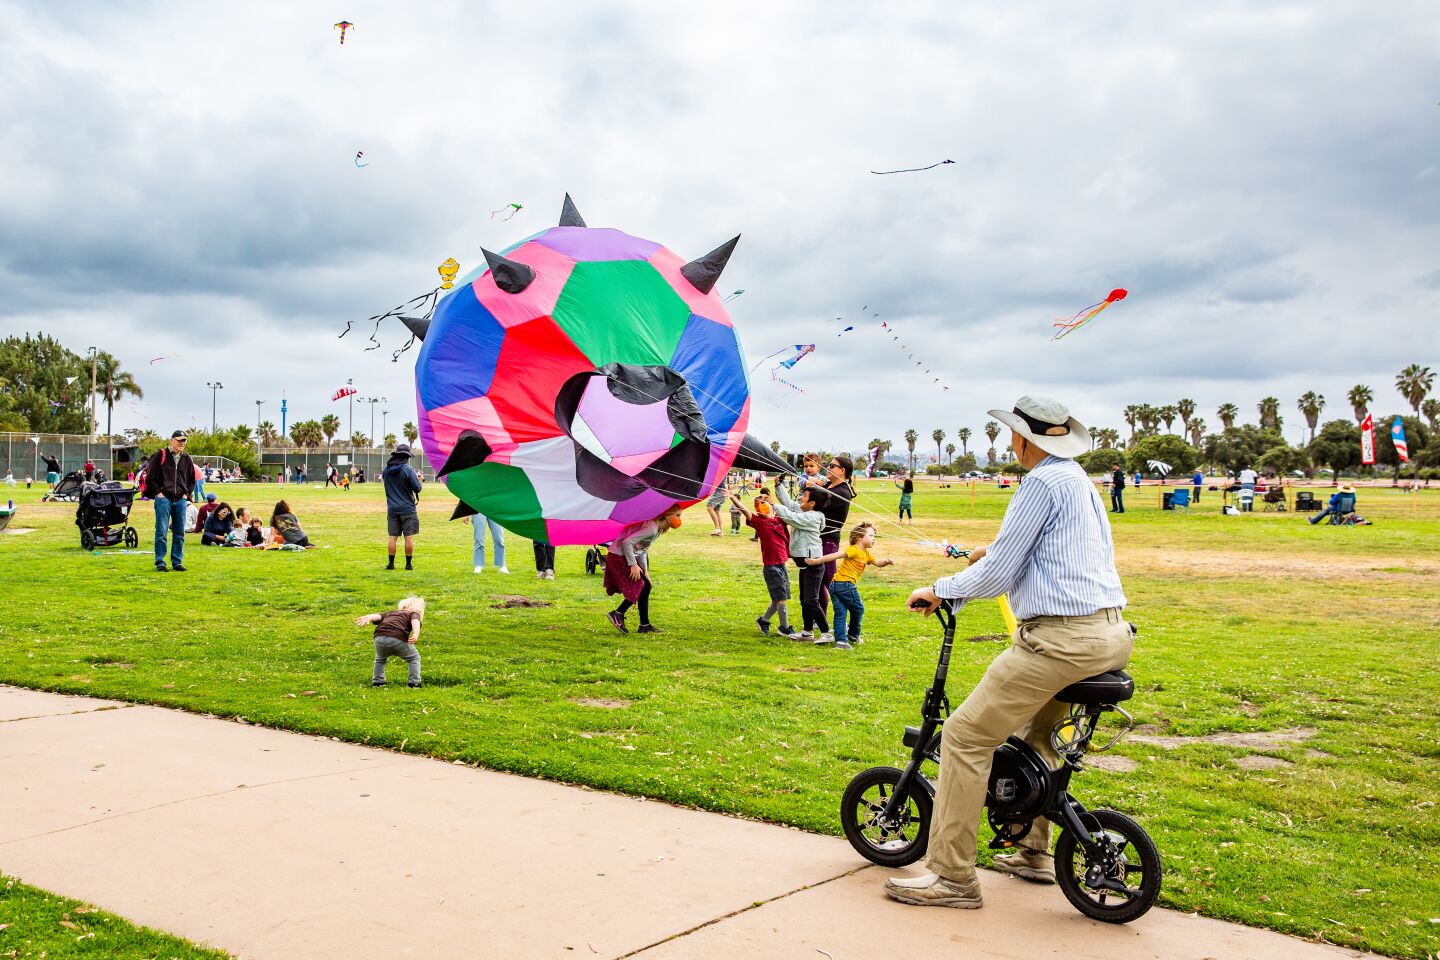 Craig Adams of the San Diego Kite Club made a spherical kite.